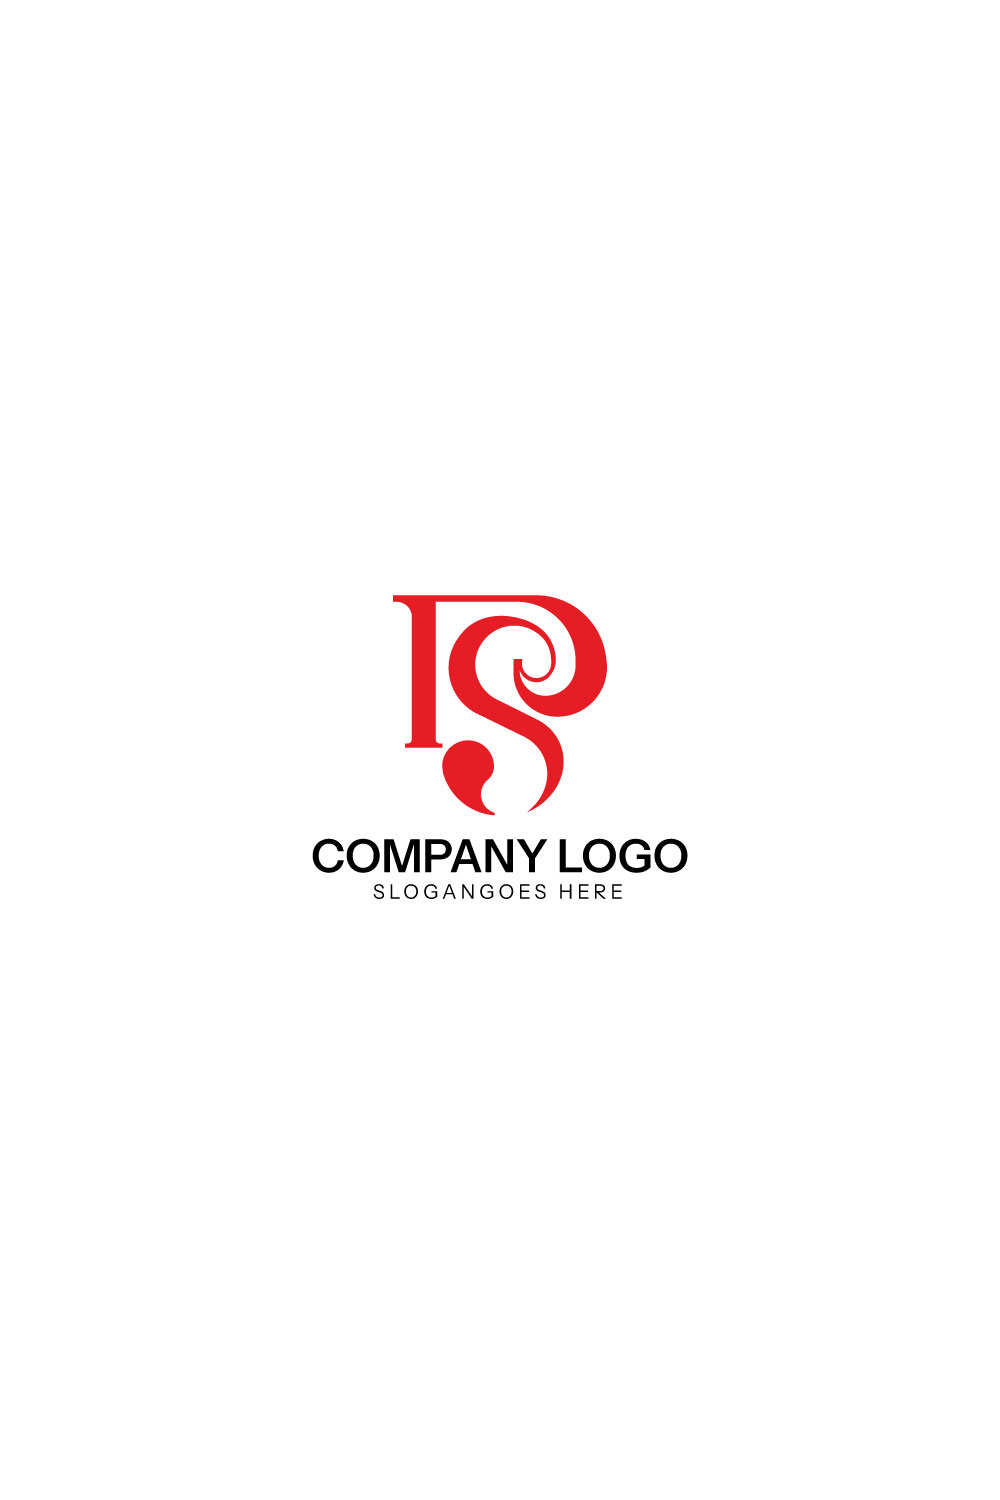 SI Initial handwriting logo design - stock vector 2604052 | Crushpixel